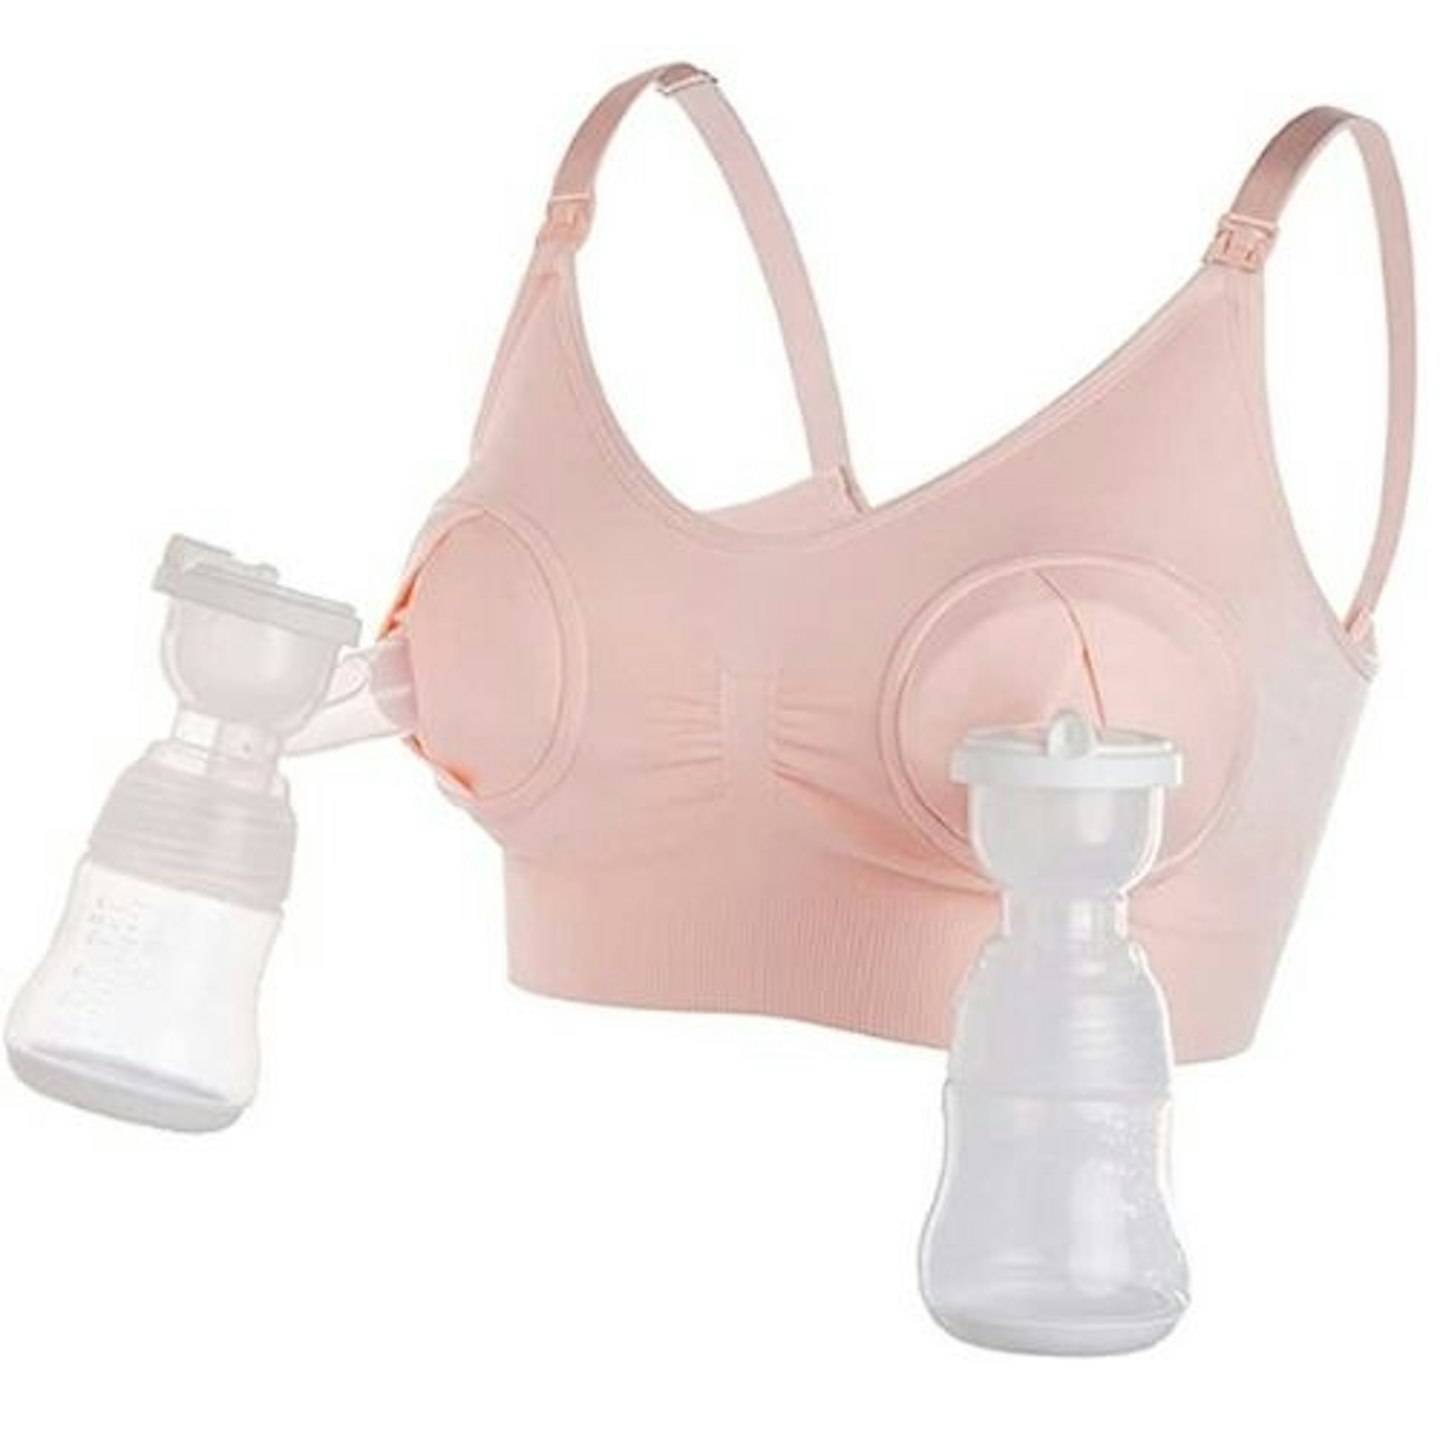 https://images.bauerhosting.com/affiliates/sites/12/motherandbaby/2022/05/LEAPOVER-Women-Hands-Free-Breast-Pump-Bra.jpg?auto=format&w=1440&q=80